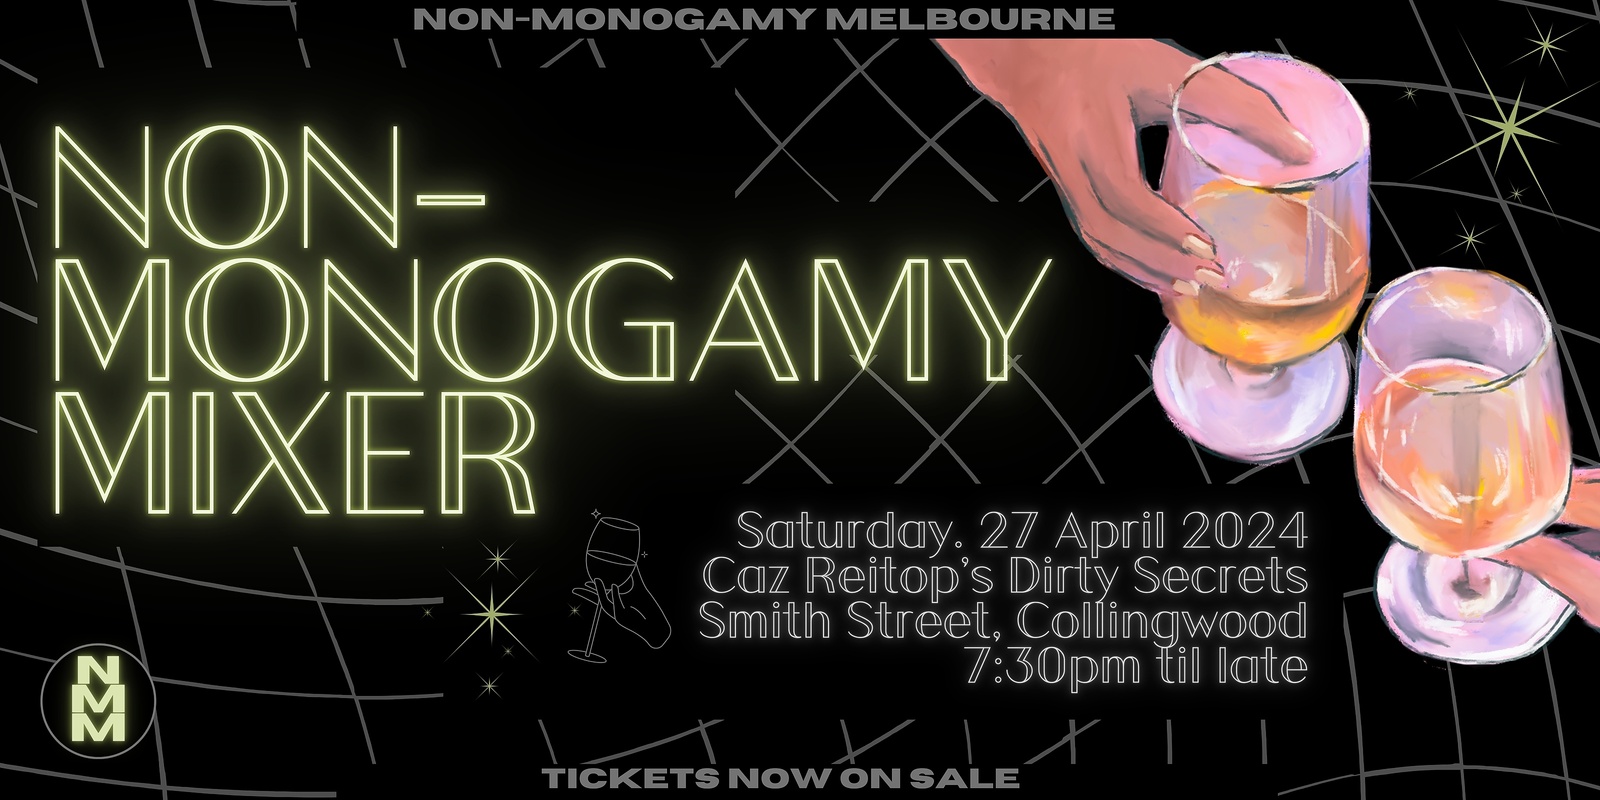 Banner image for 'NON-MONOGAMY MIXER' by Non-Monogamy Melbourne